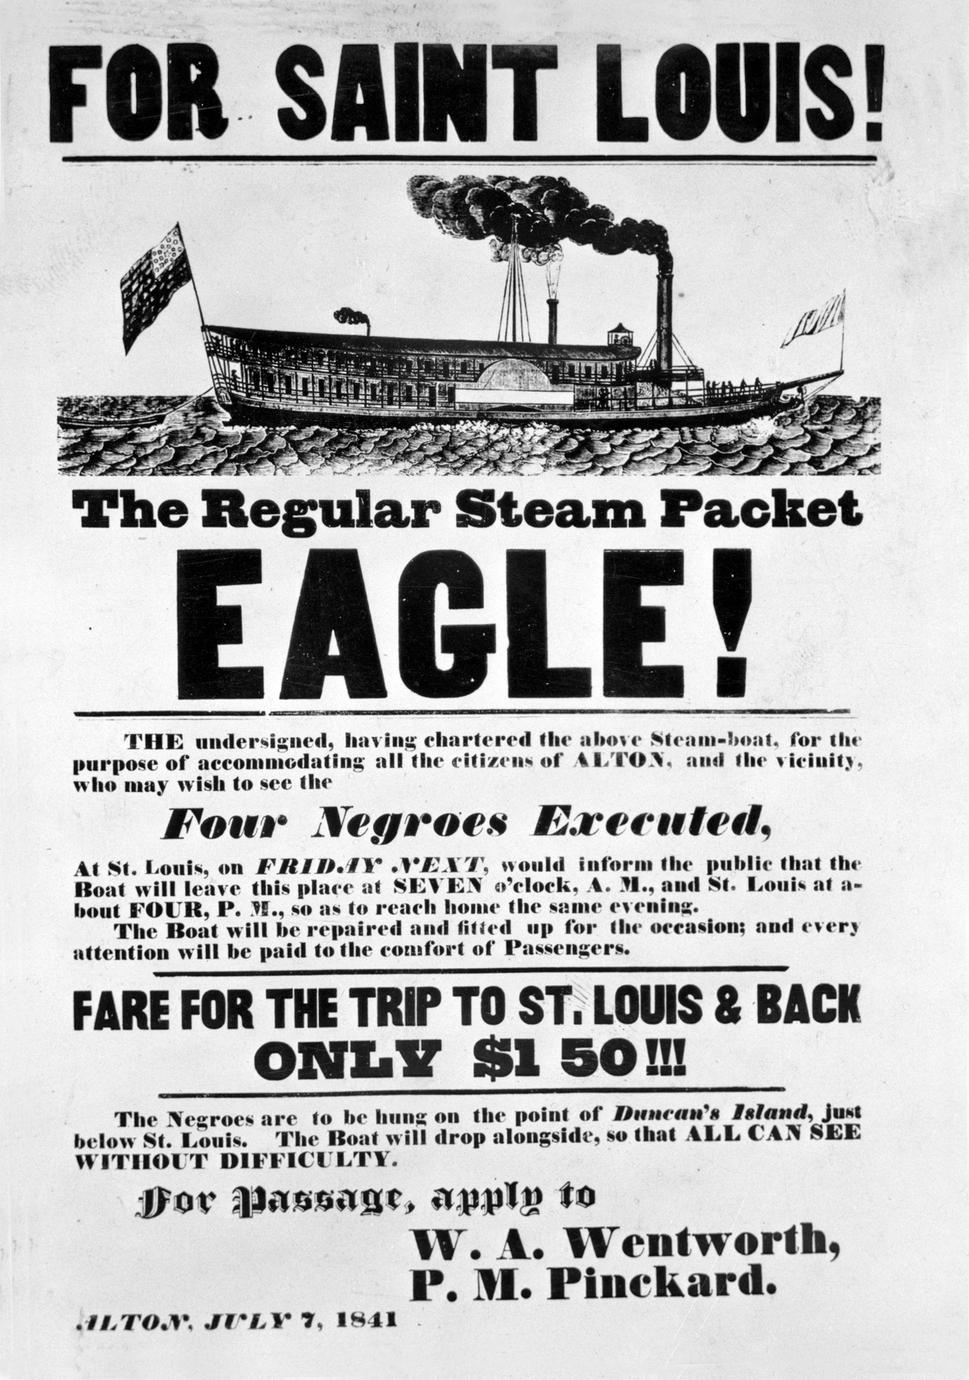 Eagle (Packet, circa 1838-1846)